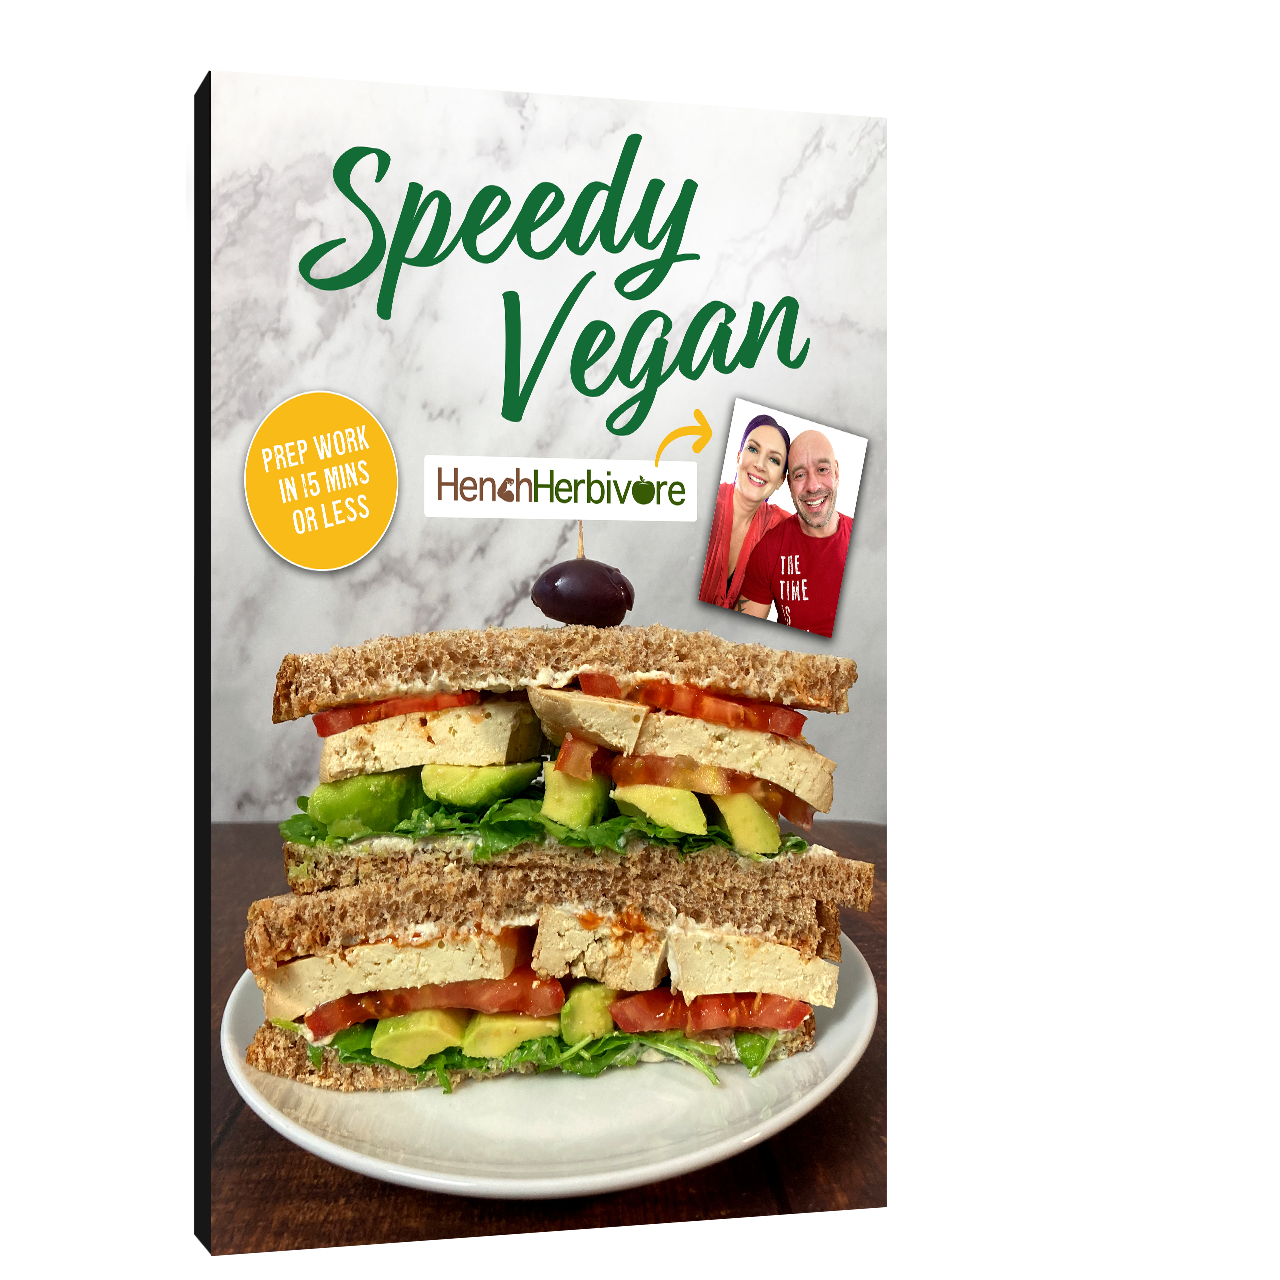 The Speedy Vegan- The Speedy Vegan